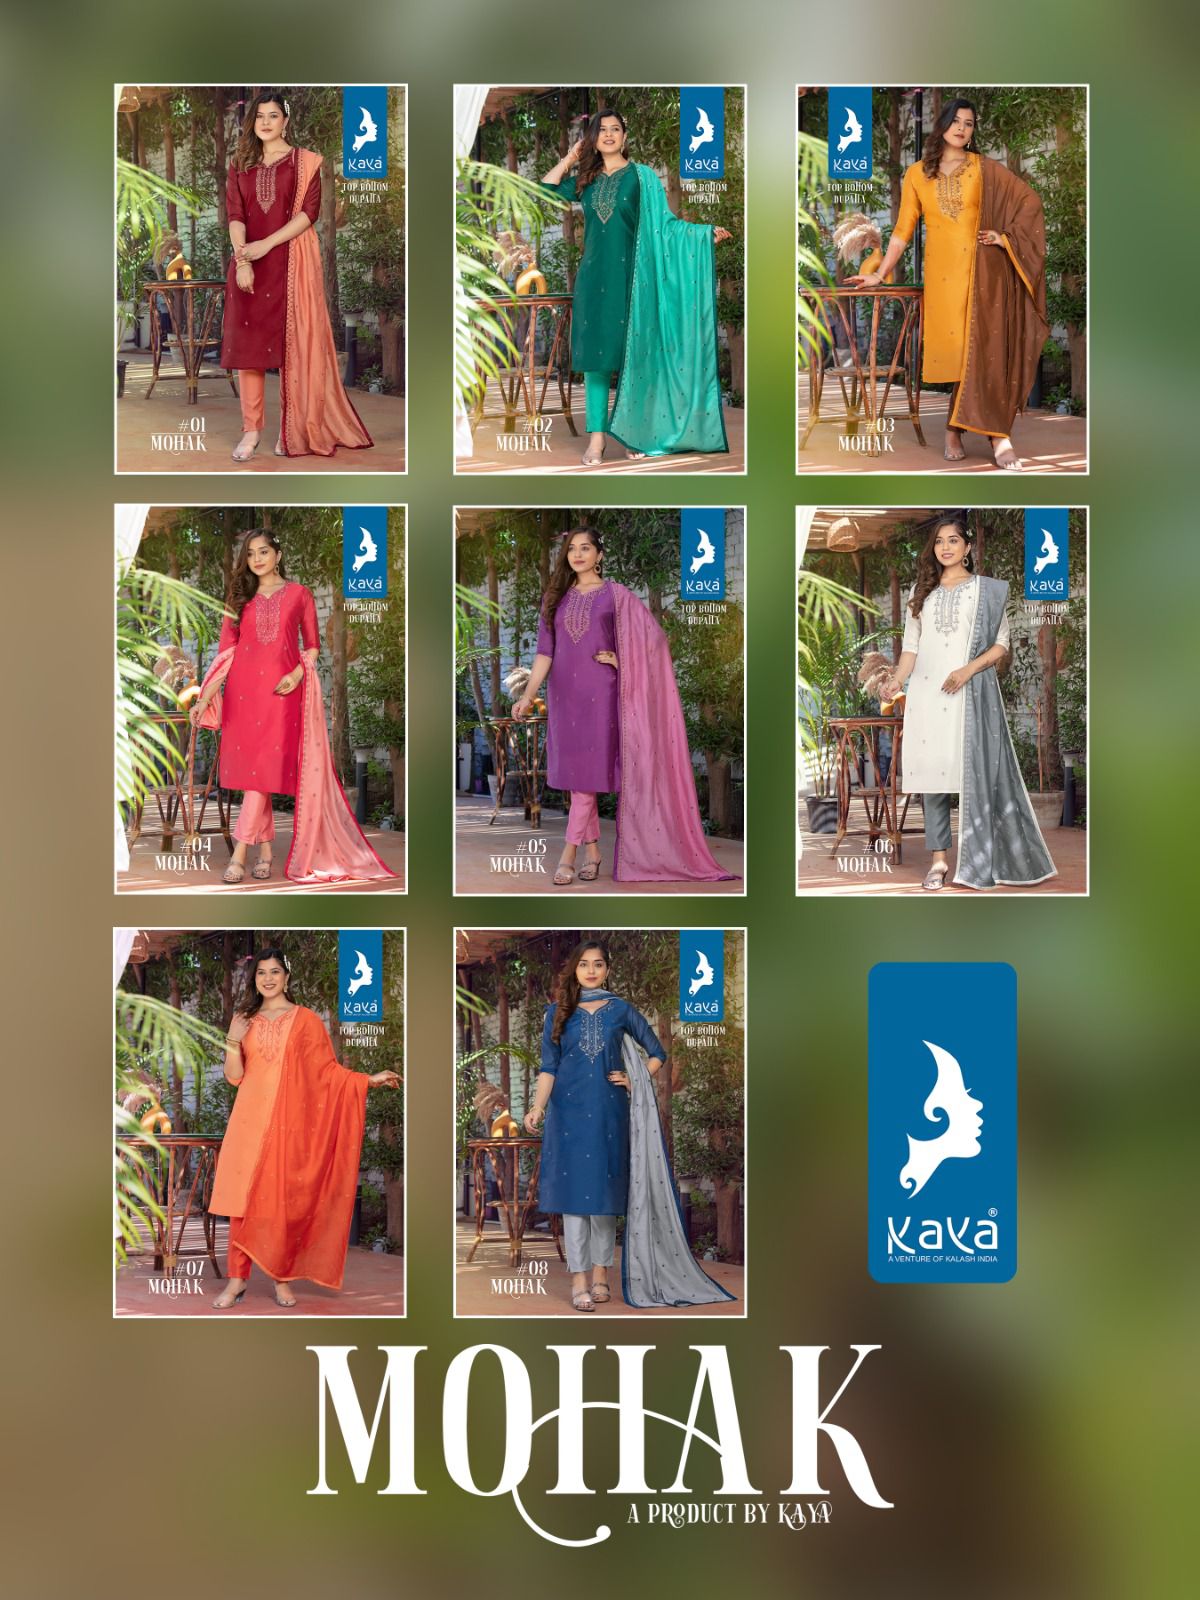 Kaya Mohak collection 4